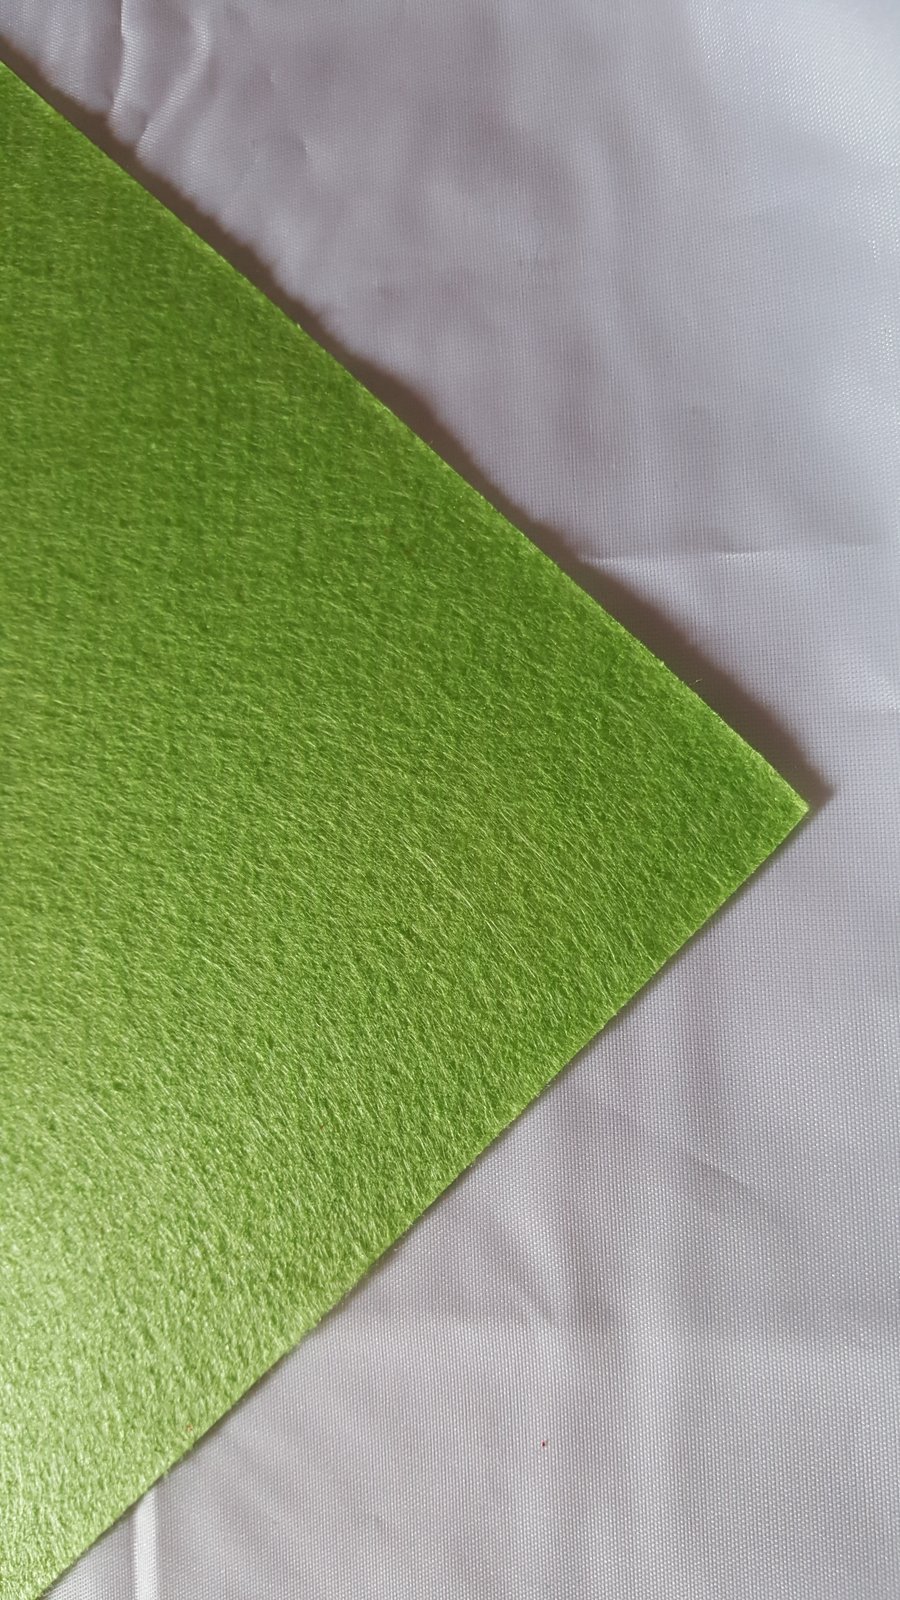 1 x Felt Sheet - Square - 12" (30cm) - Spring Green 